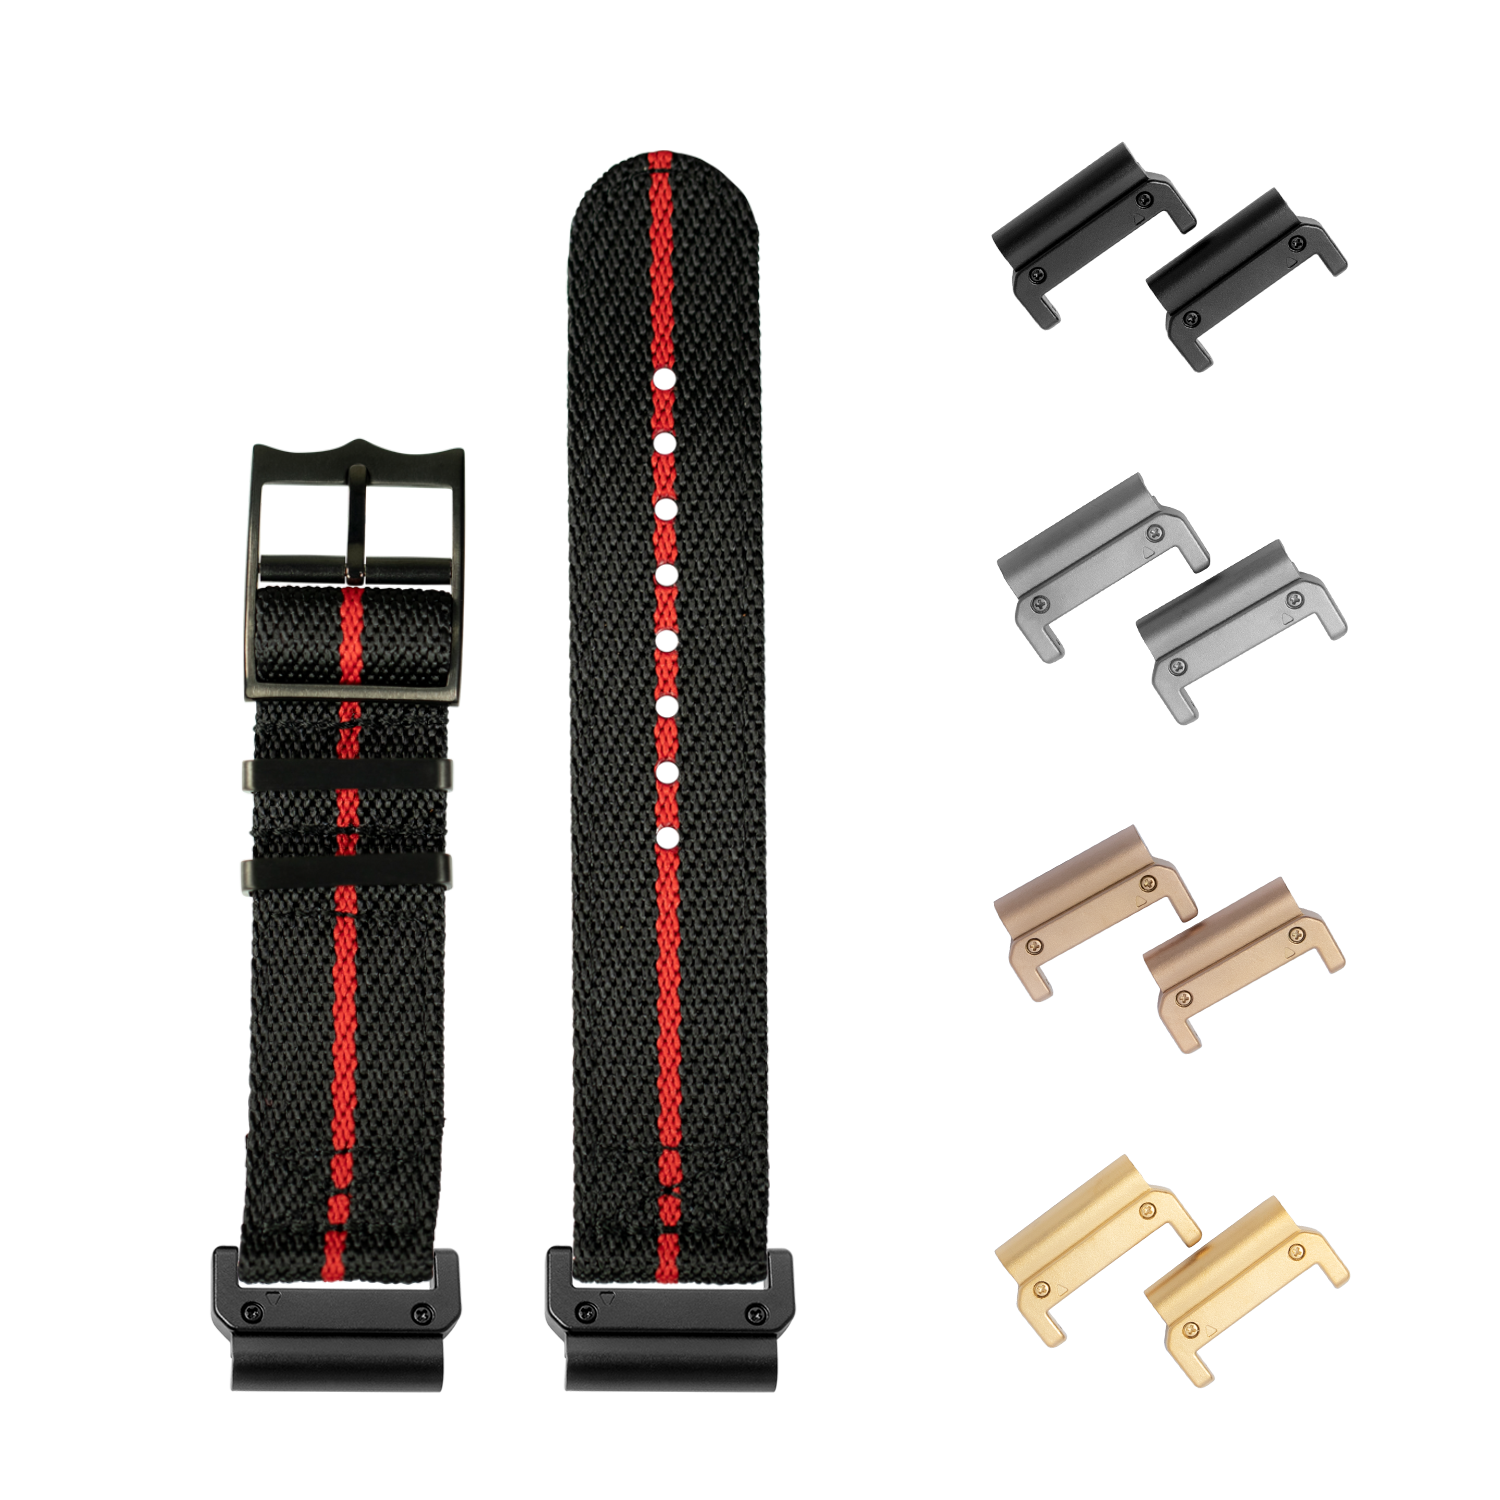 [QuickFit] Cross Militex - Black / Red [Black Hardware] 26mm